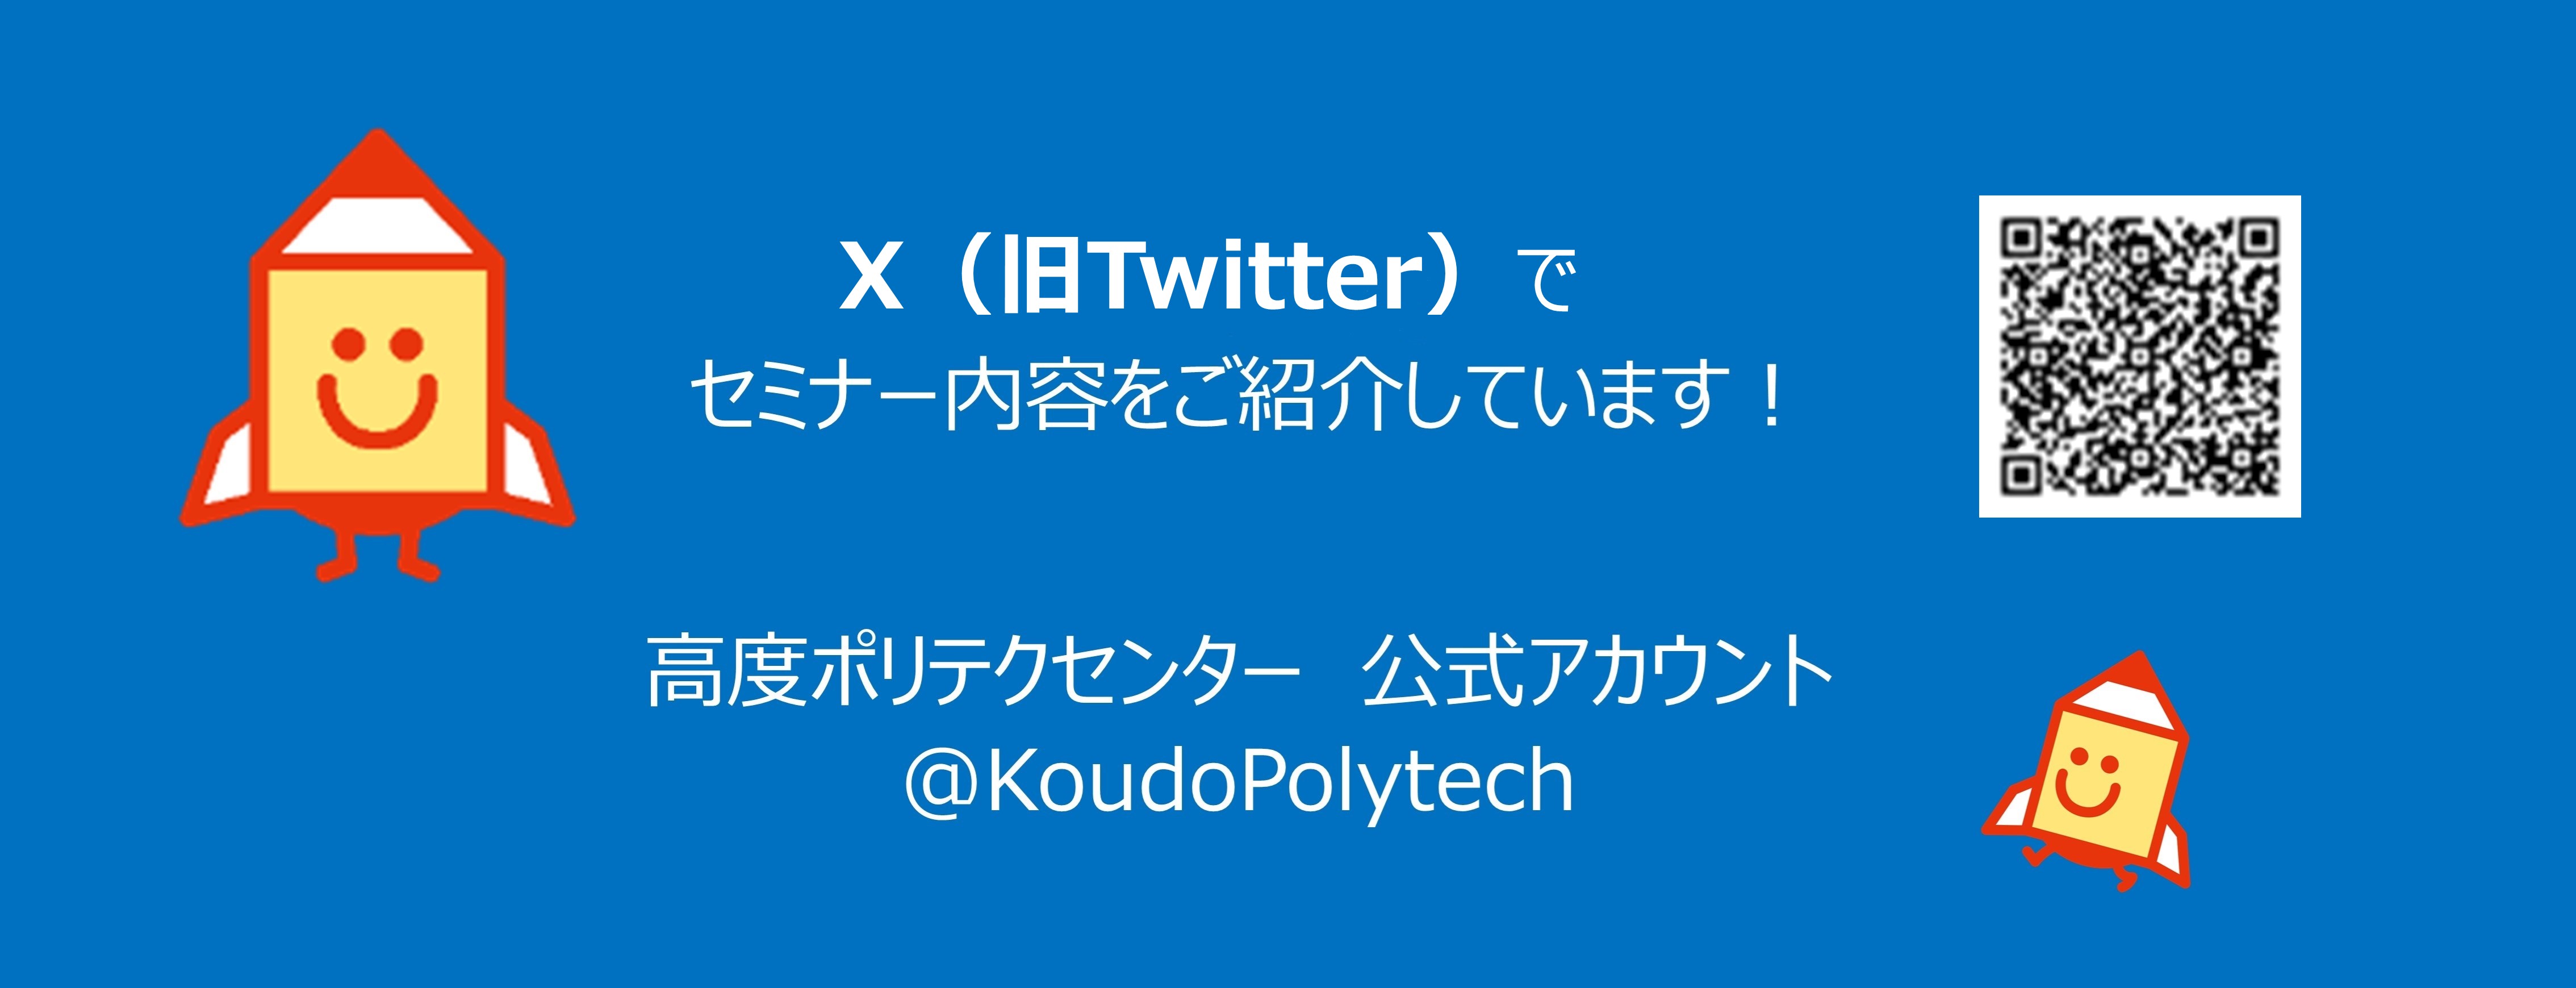 X(旧Twitter)でセミナー内容をご紹介しています。高度ポリテクセンター公式アカウント@KoudoPolytech